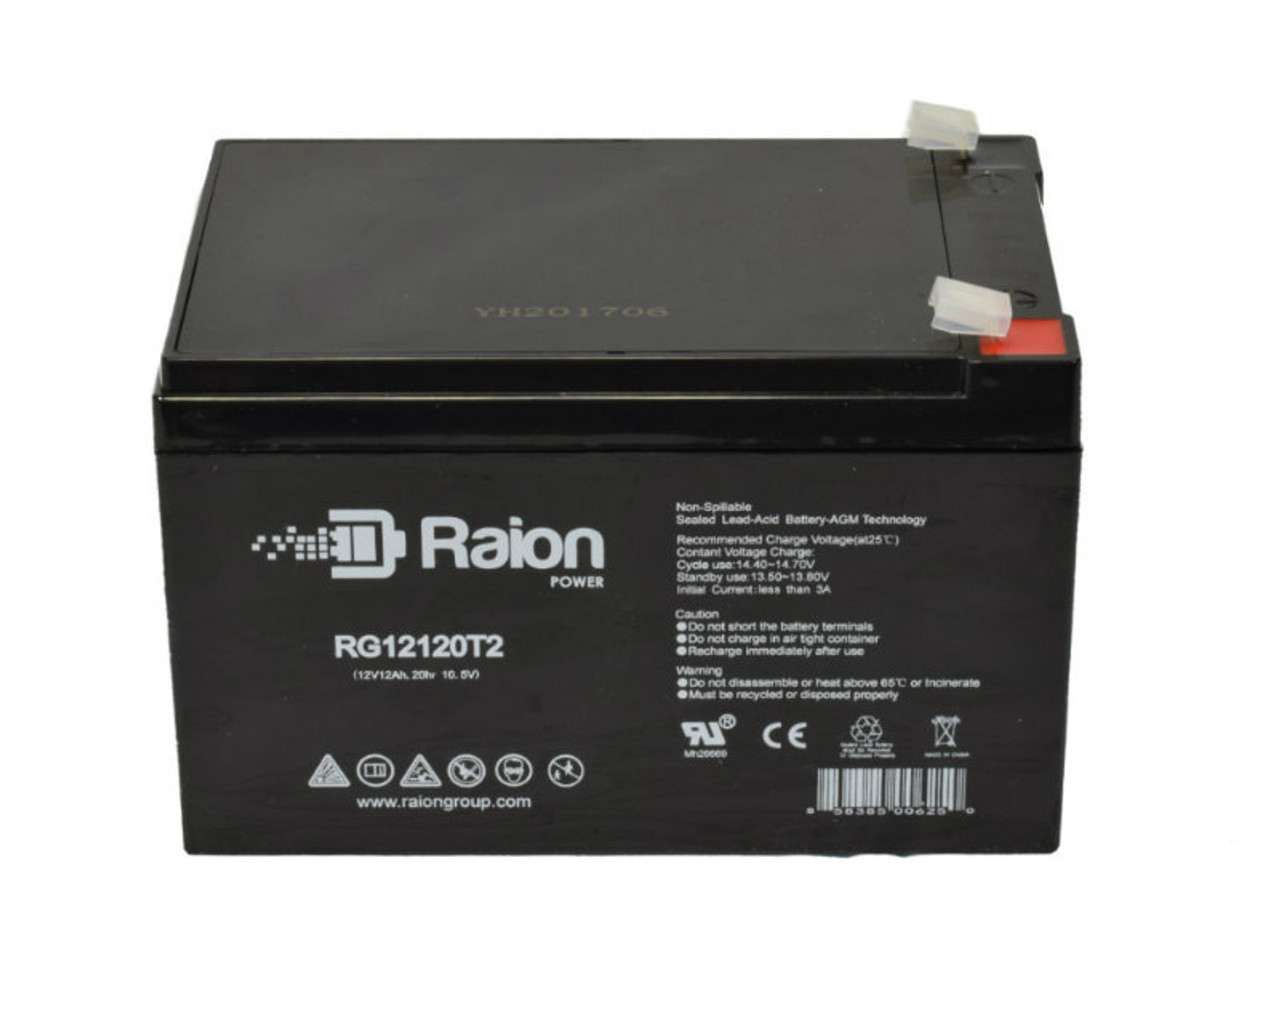 Raion Power RG12120T2 SLA Battery for Tao Motor Baymax 500